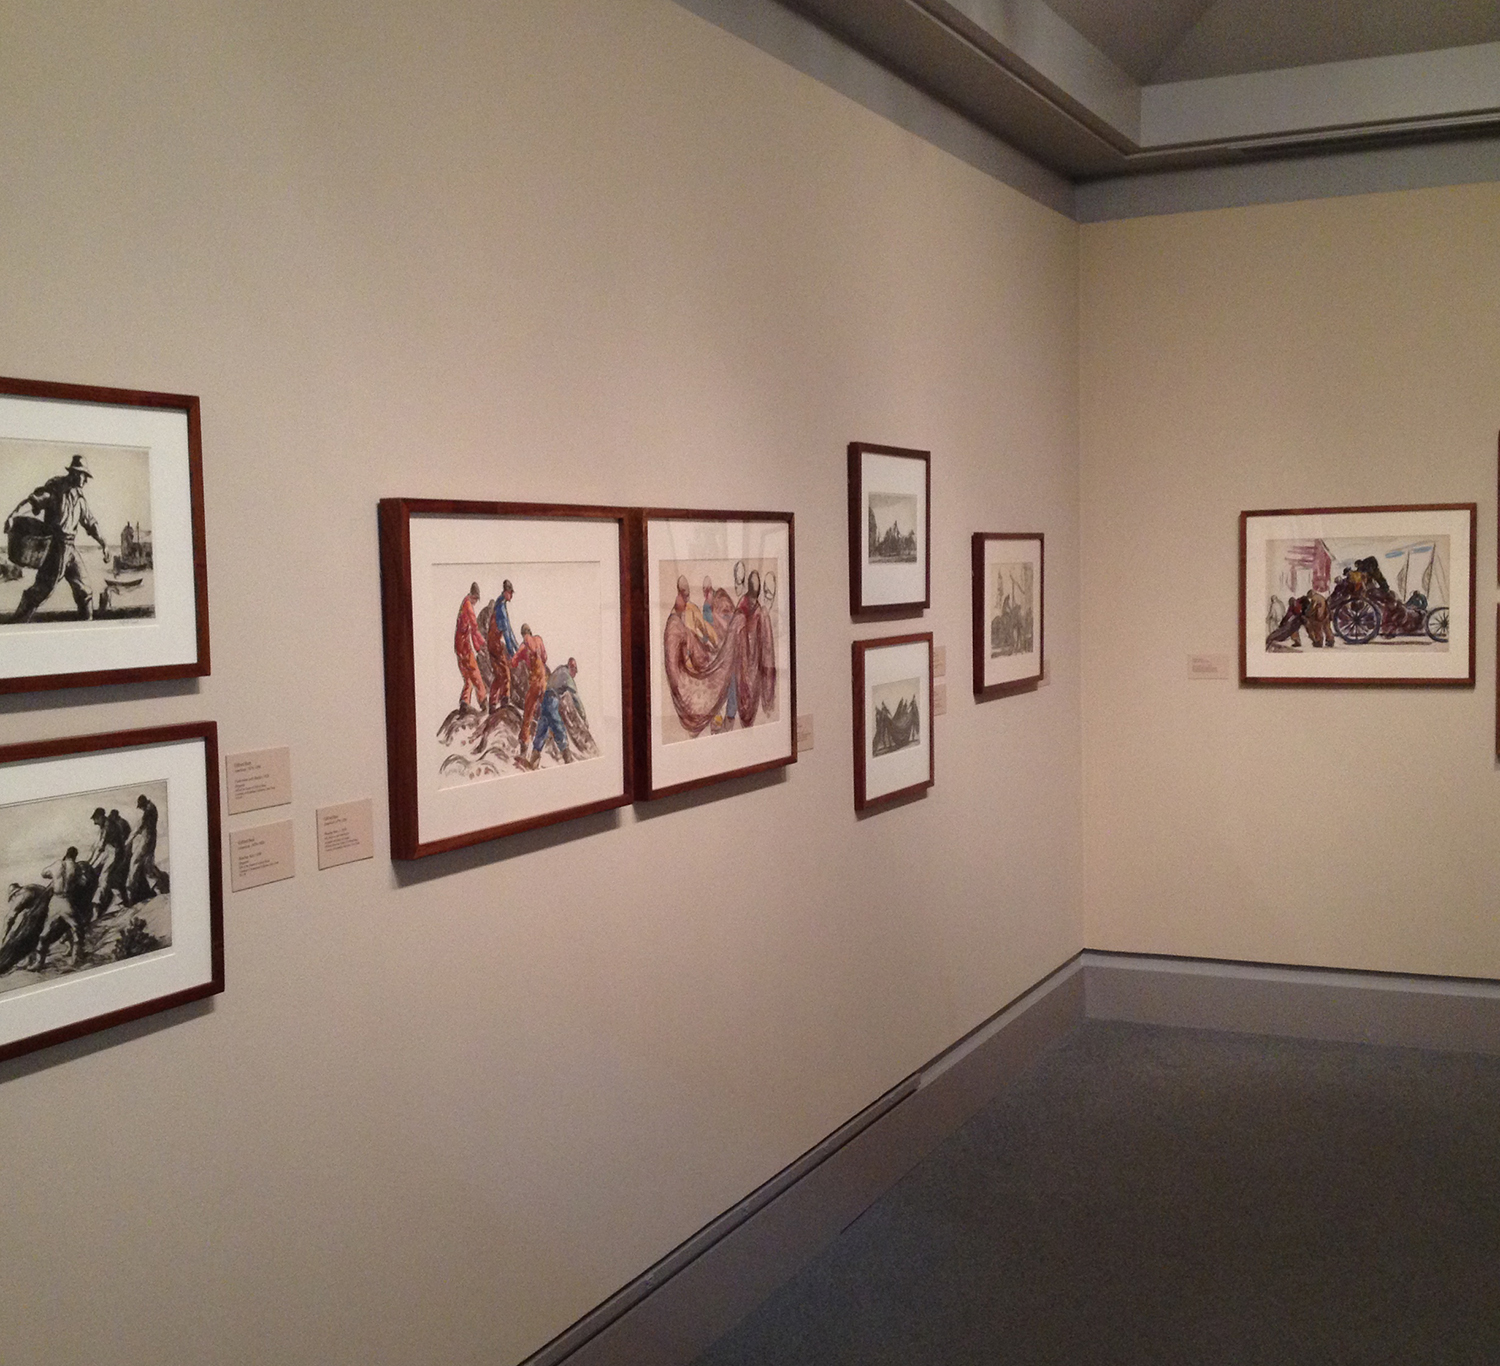 Installation photos of Gifford Beal's framed art